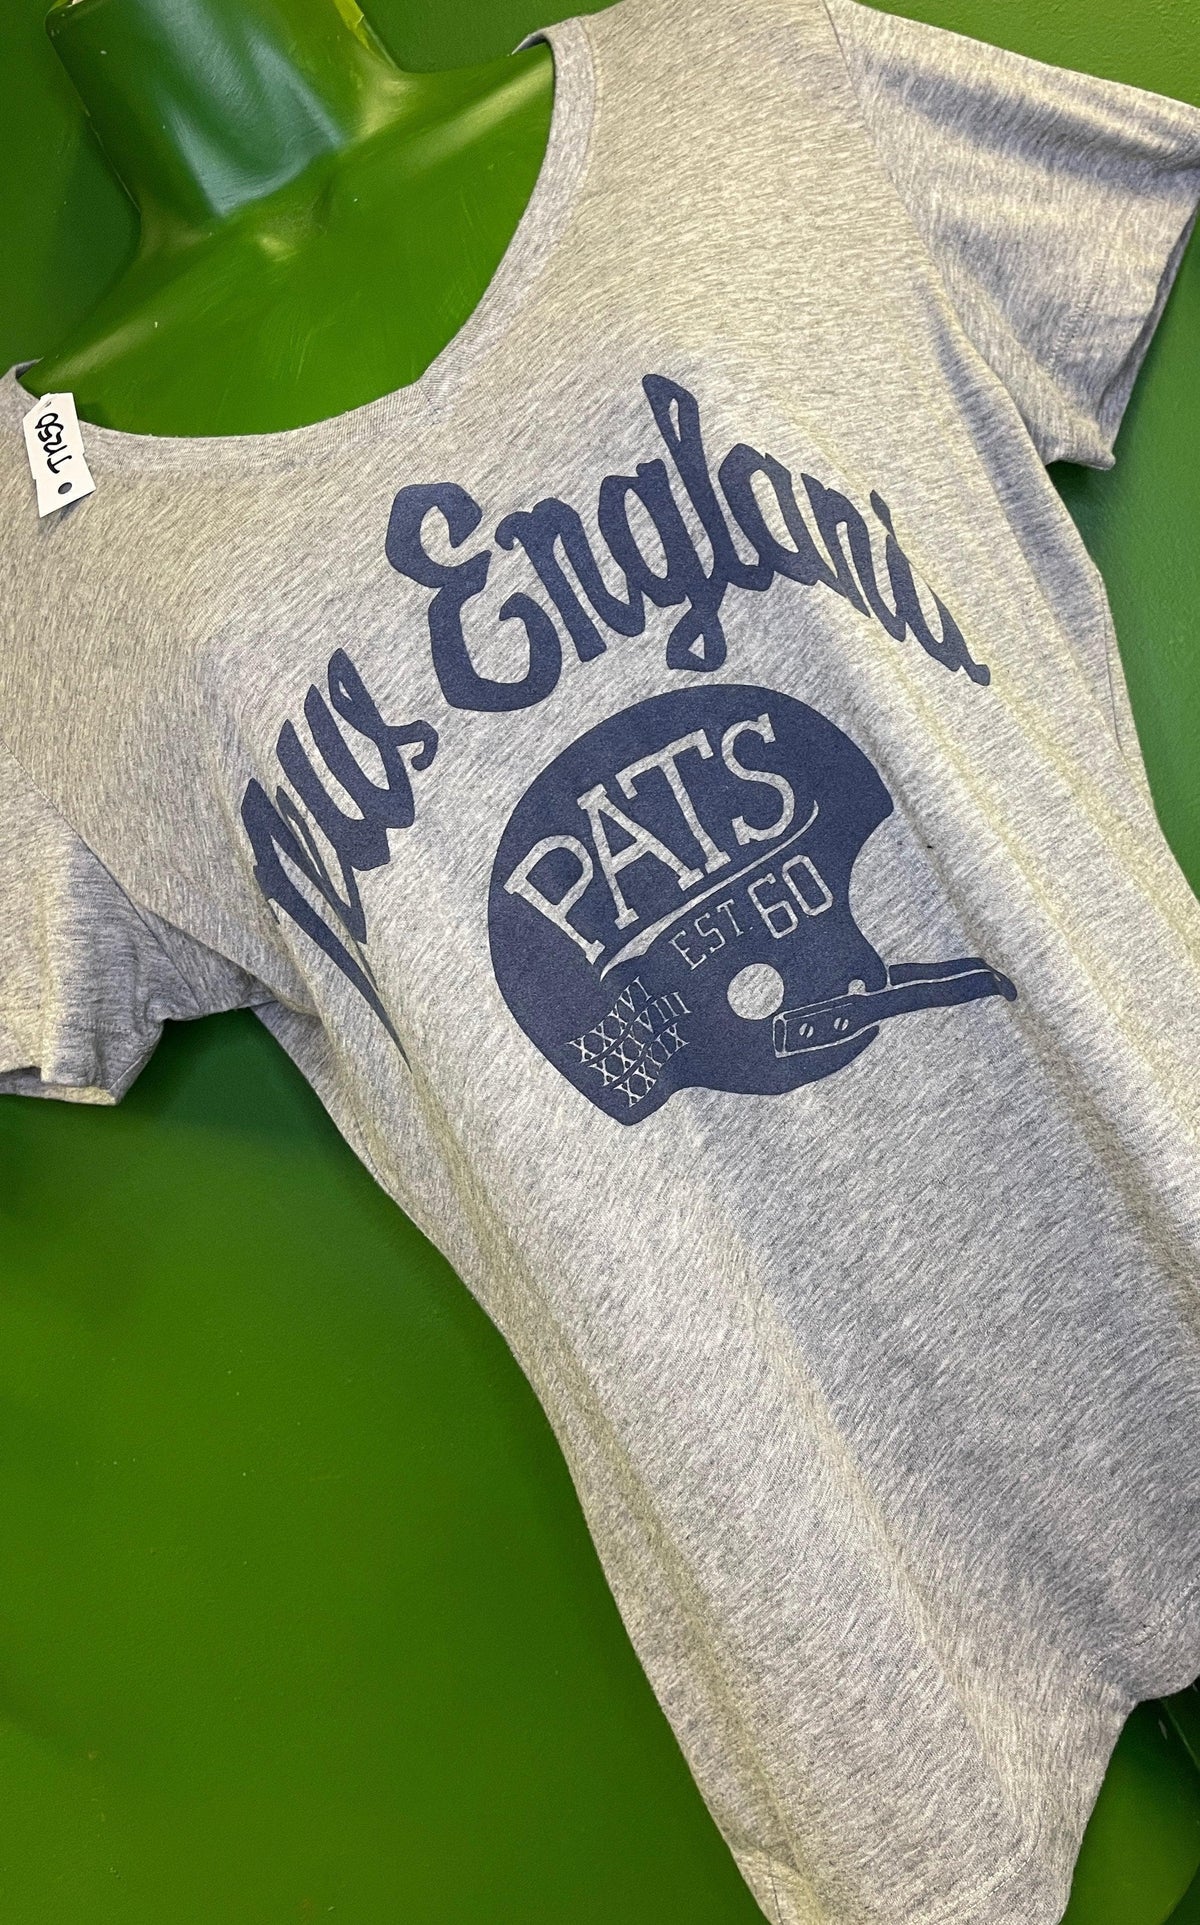 NFL New England Patriots Heathered Grey T-Shirt Women's Large